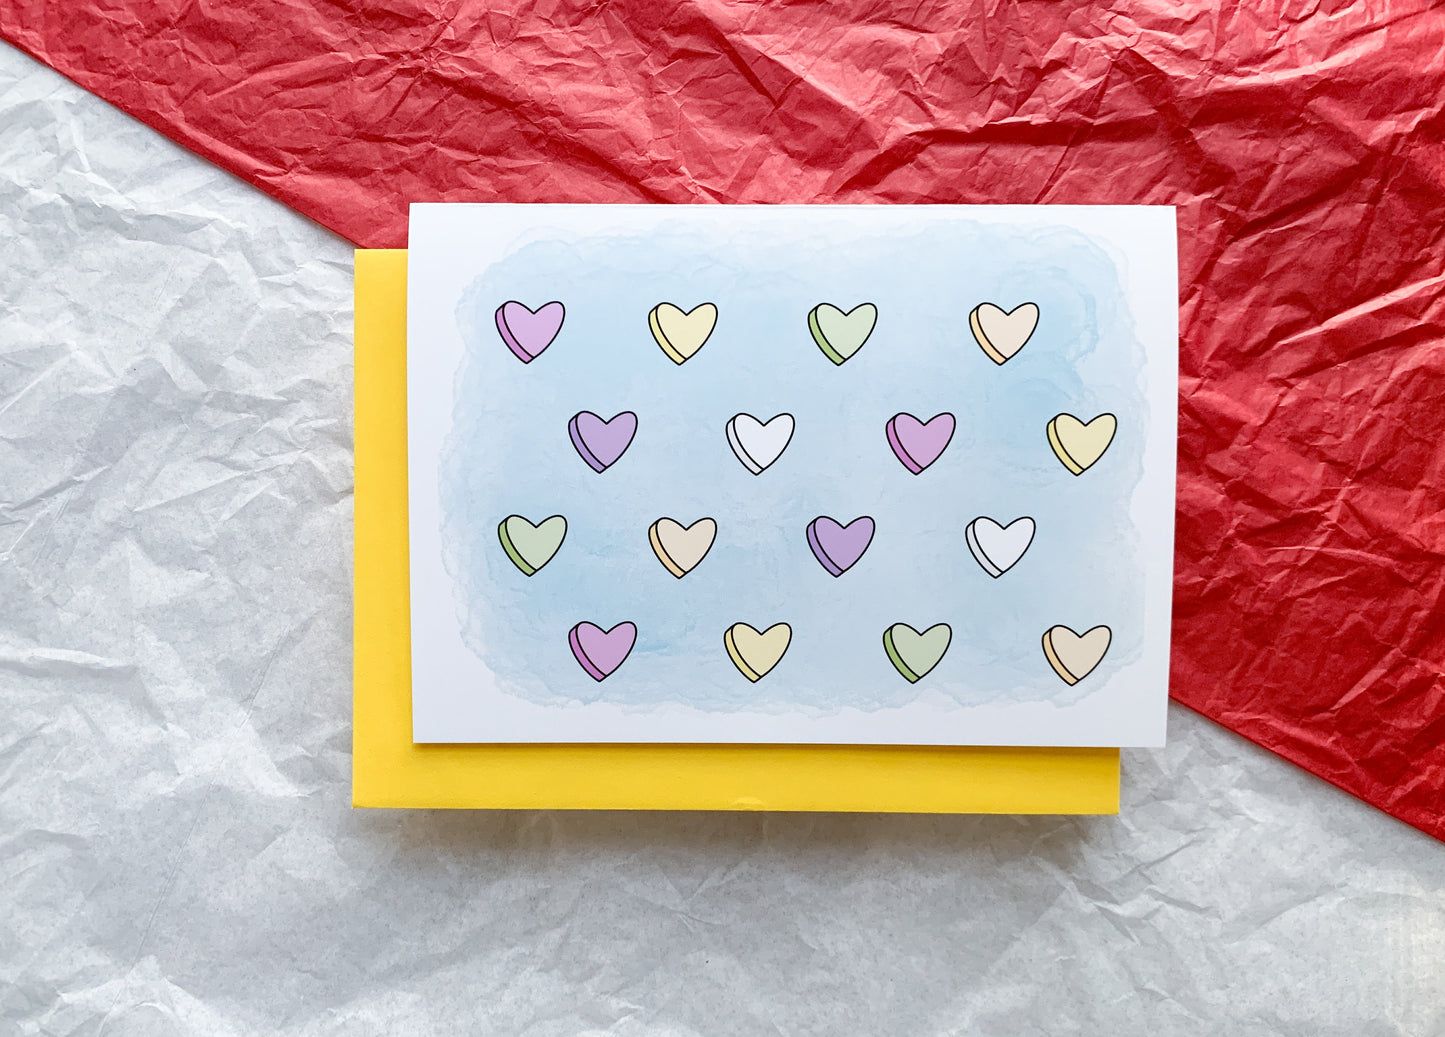 Tiny Candy Hearts Cute Handmade Valentine's Day Card by StoneDonut Design